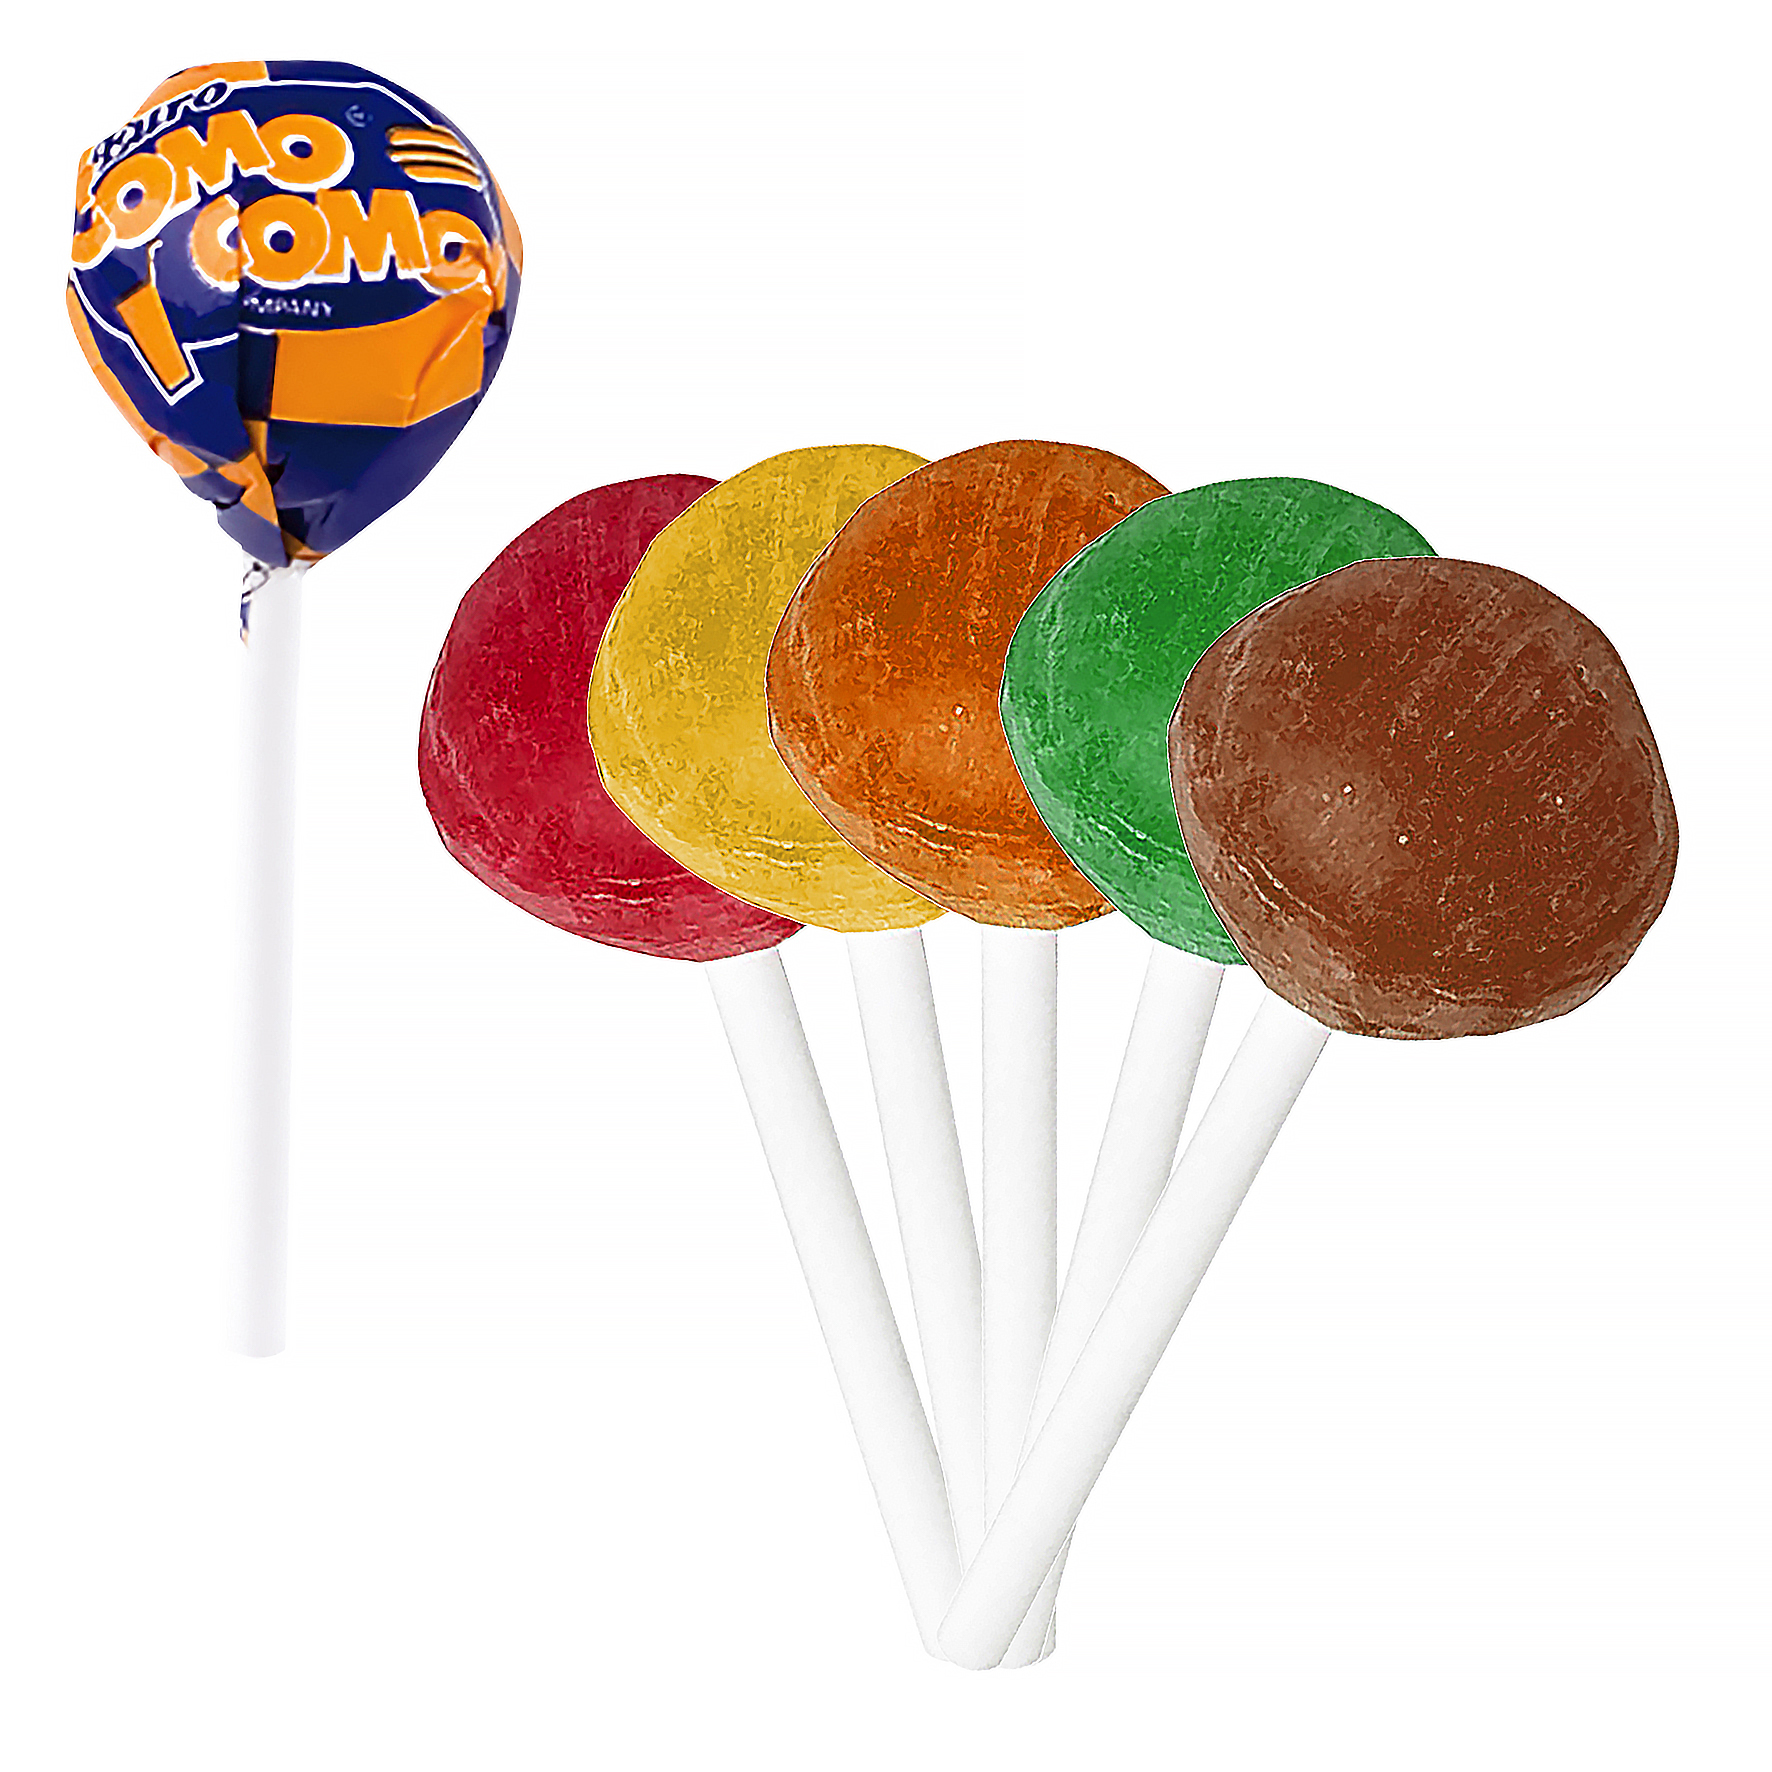 c 0040 00 09 - Classic flavoured ball lollipop (sugar free)